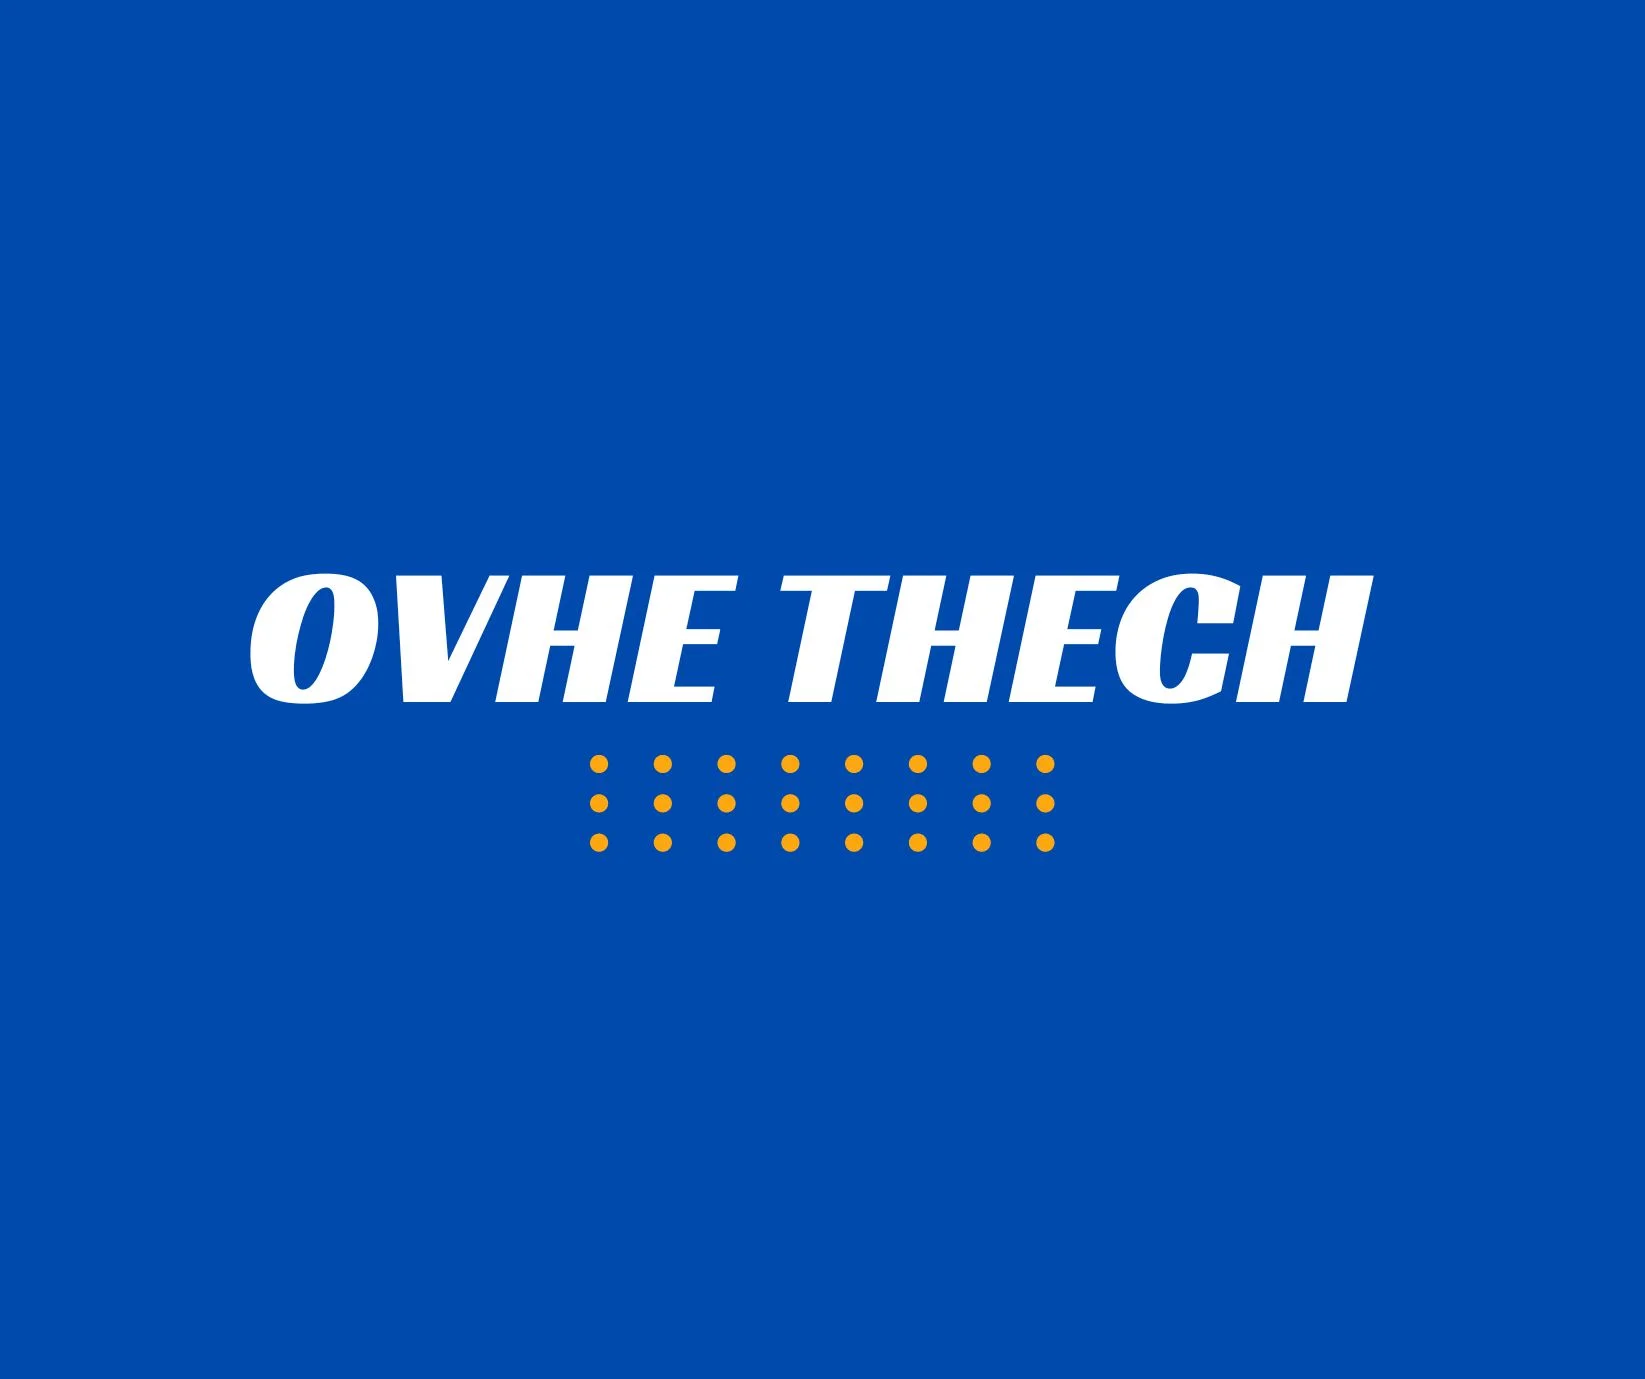 (c) Ovhetech.com